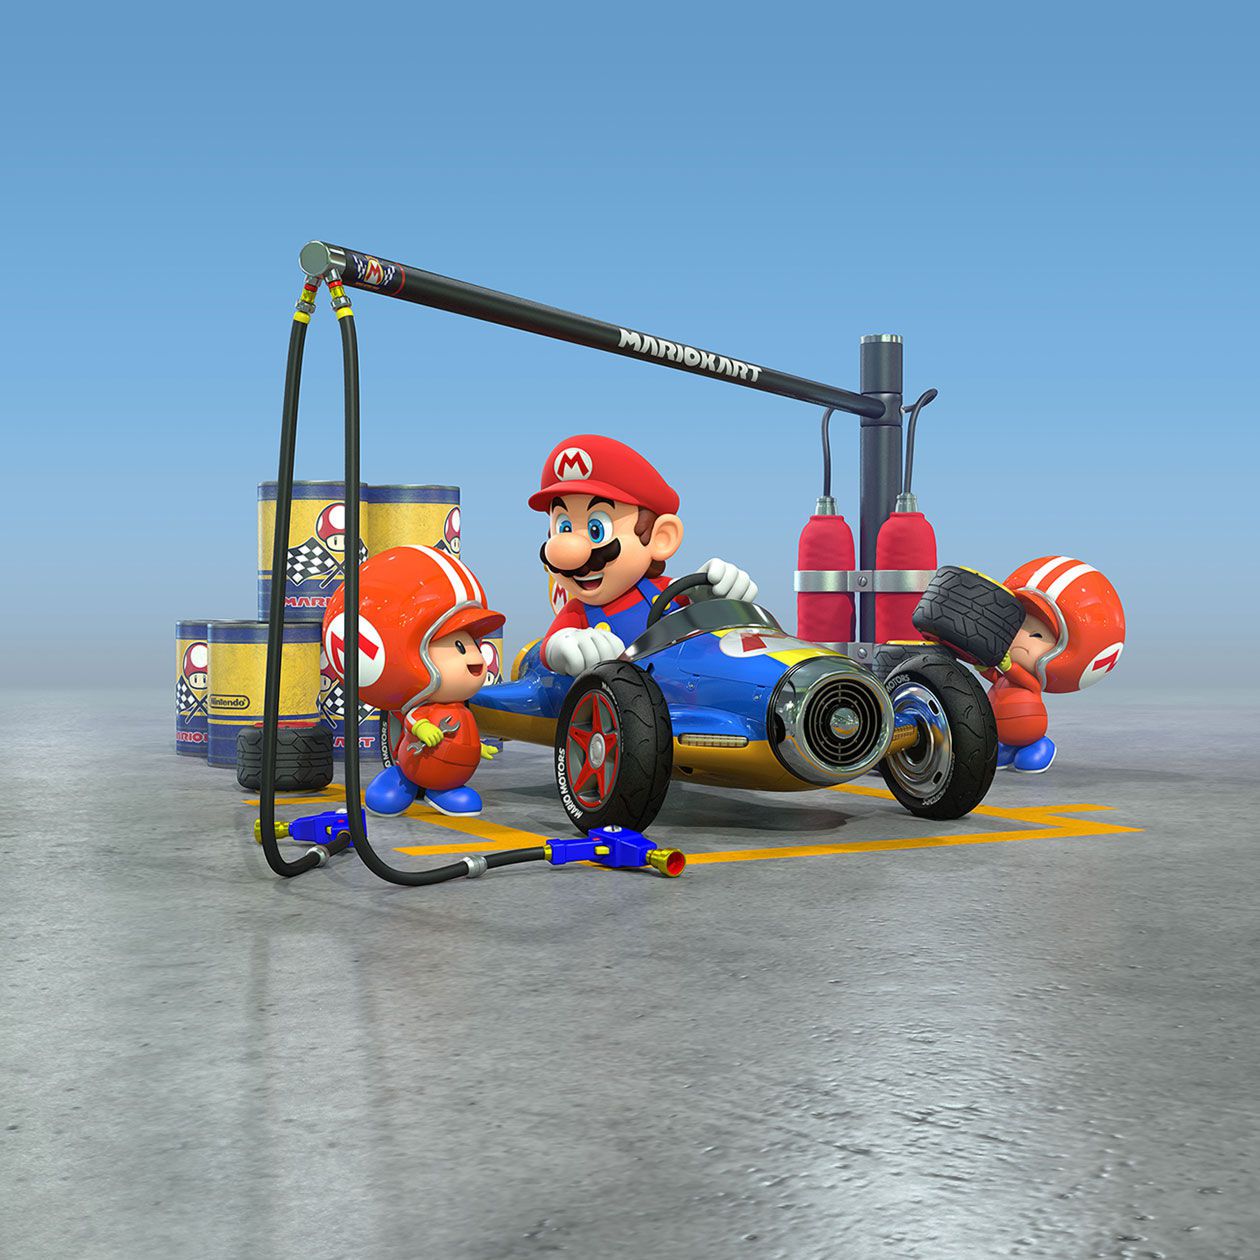 8 Mario Kart images 27